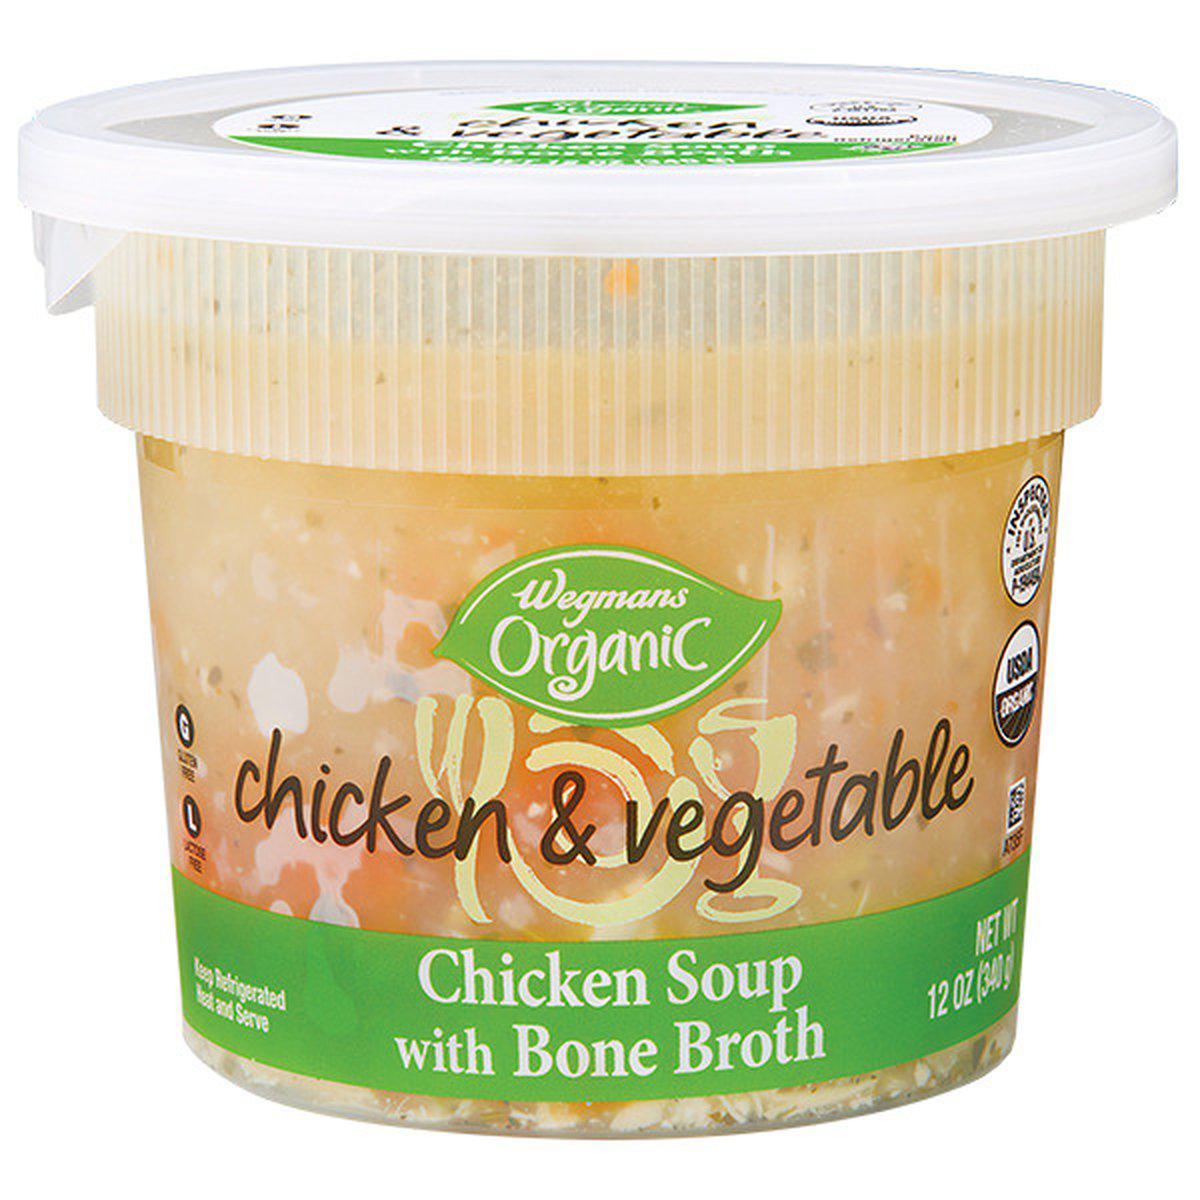 Review - Wegmans Organic Chicken Soup with Bone Broth